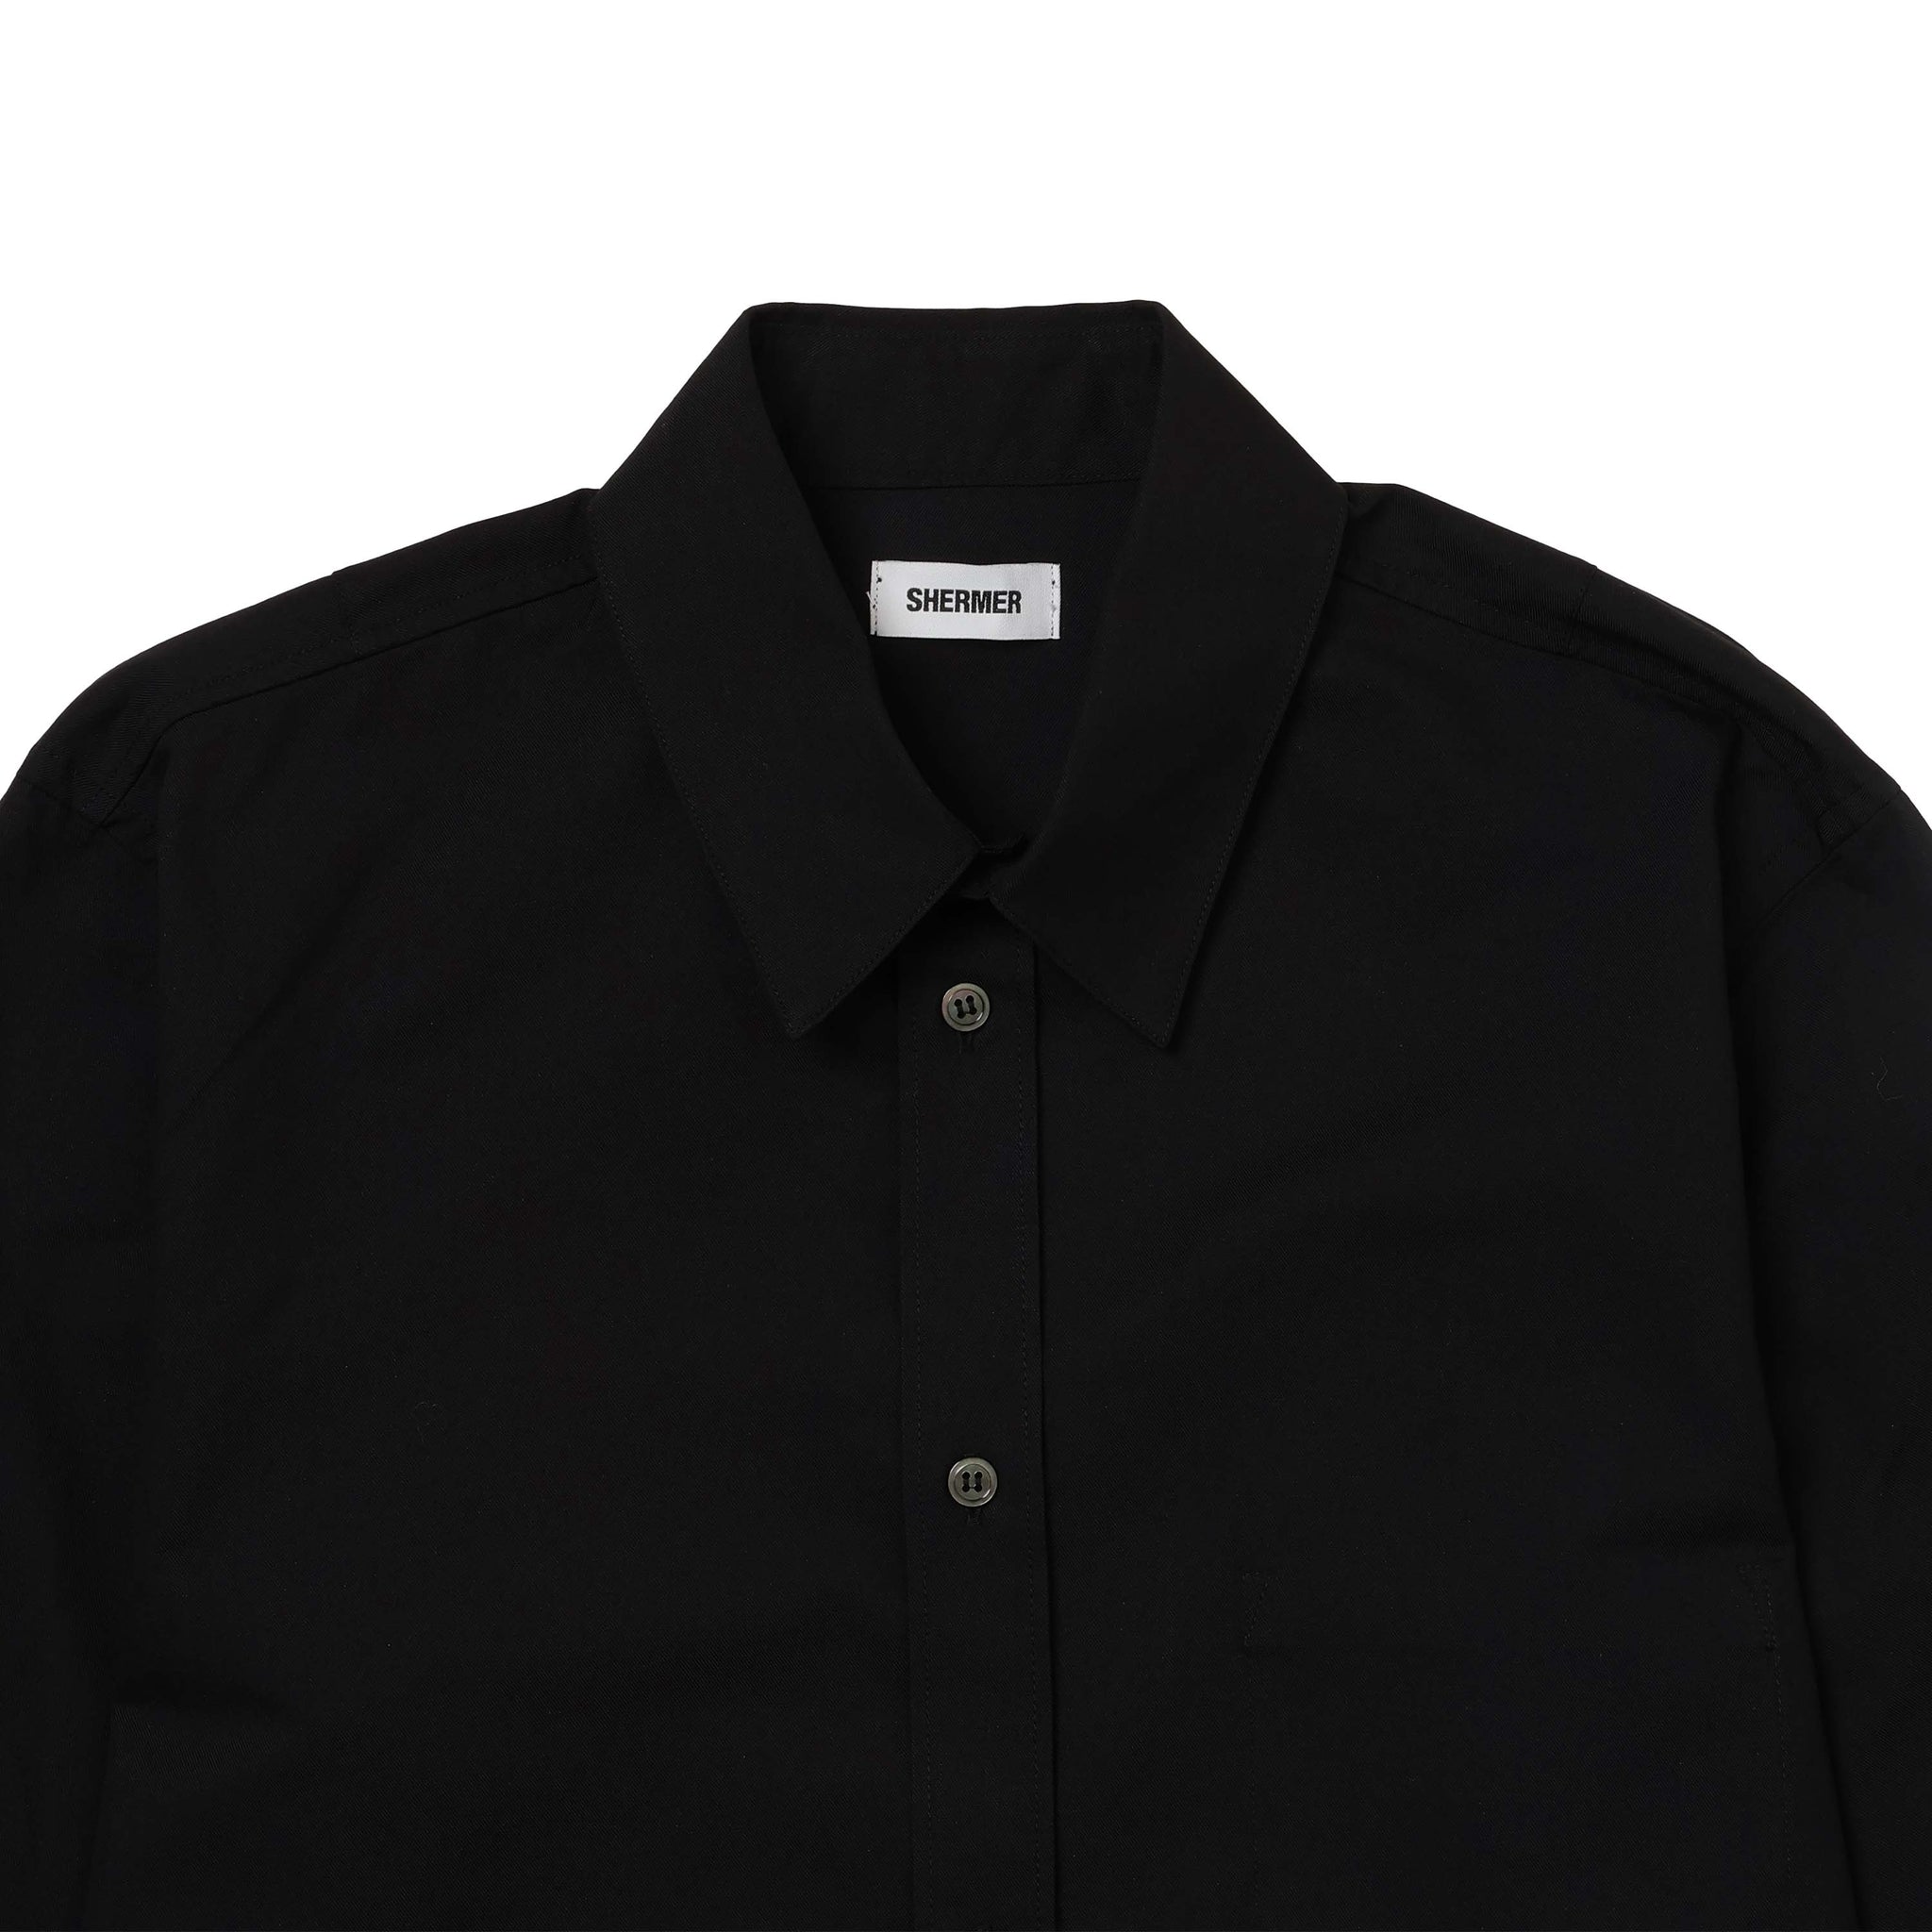 shermer dinner shirts サイズ1 ブラック